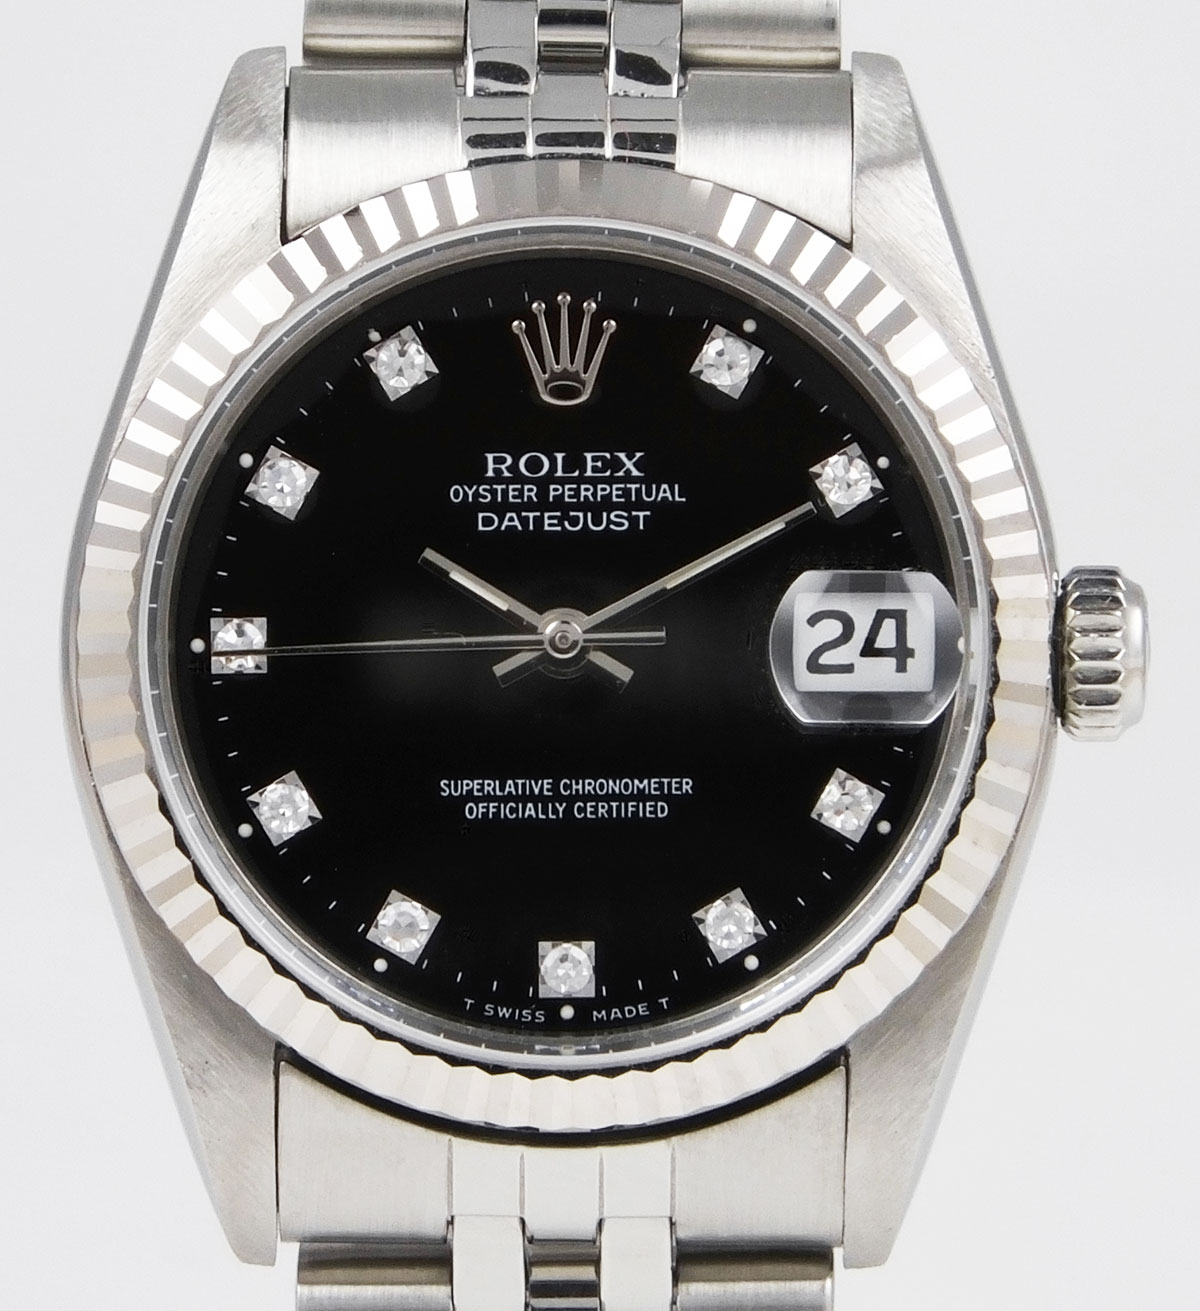 Rolex Oyster Perpetual DateJust 68274 - Black Diamond-Set Dial (1990)